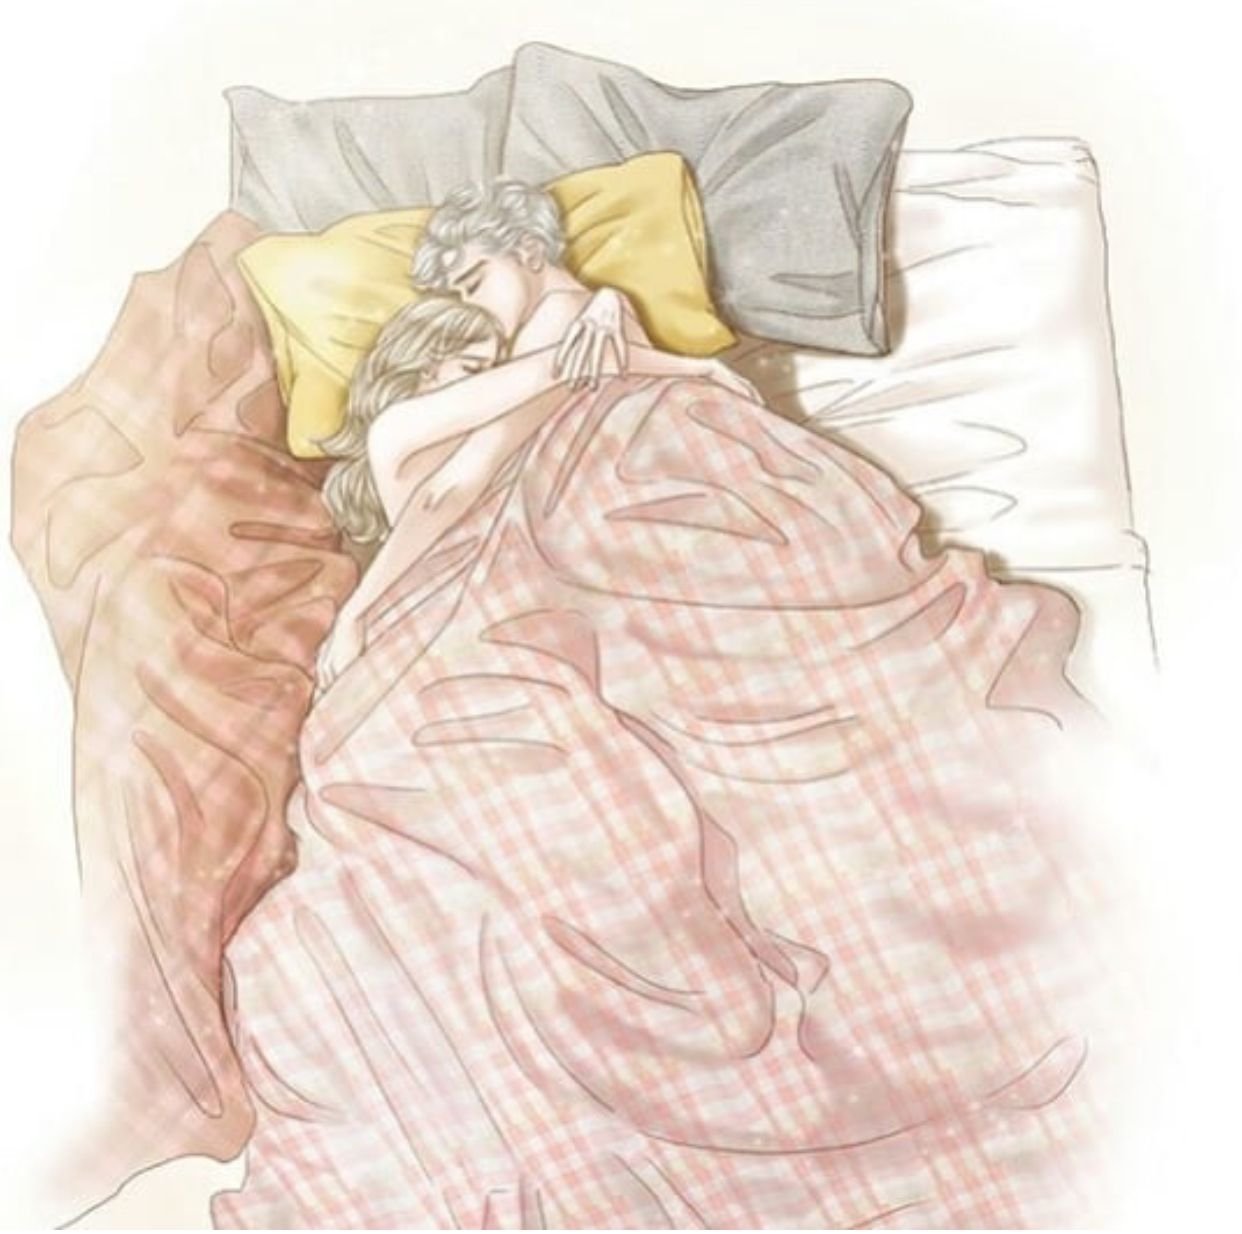 Пошли спать вместе. Обнимает одеяло. Одеяло нарисованное. Под одеялом иллюстрация. Парочка под одеялом арт.